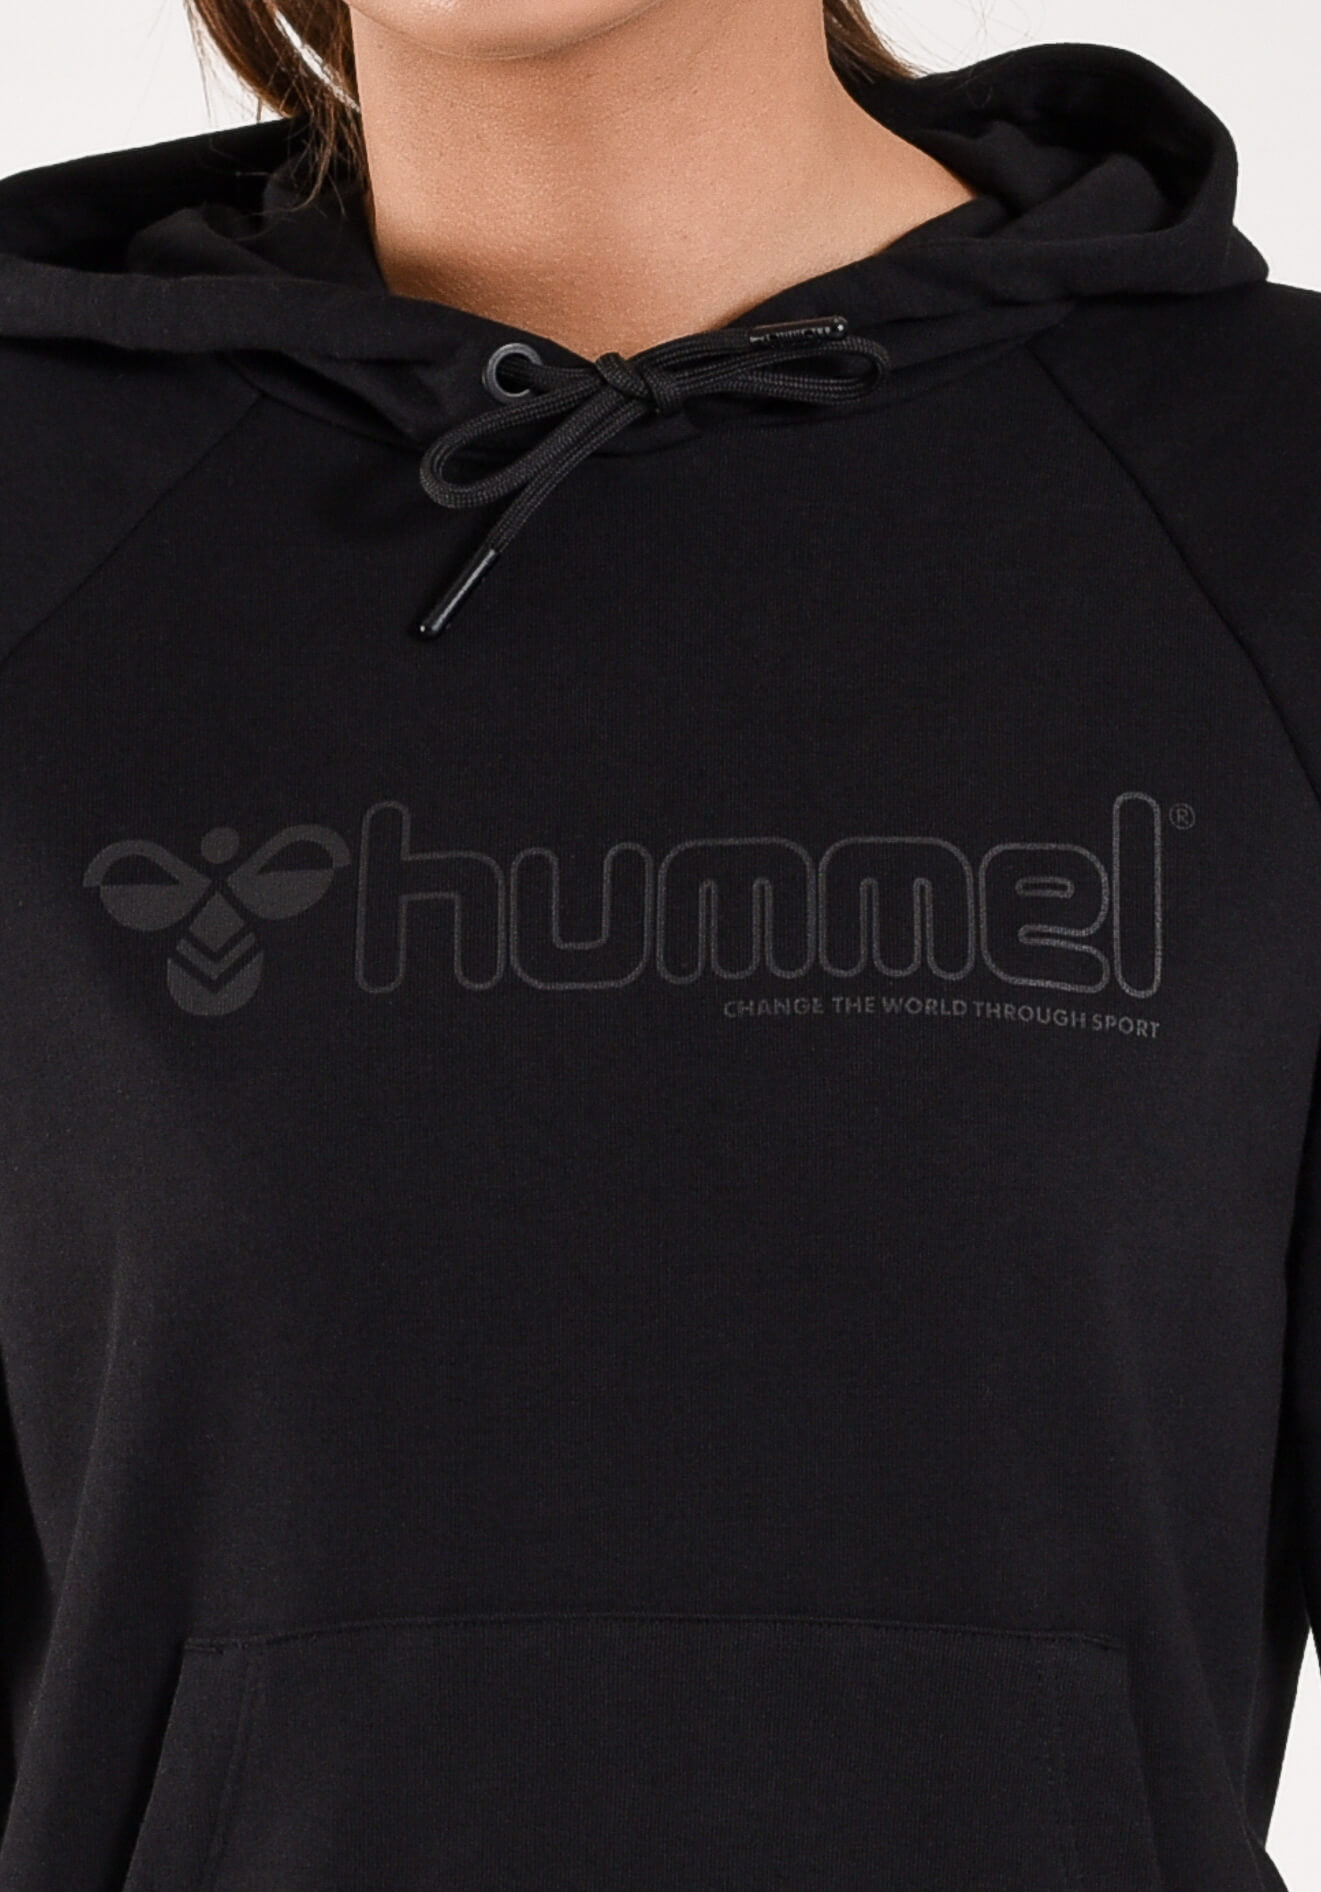 Hummel - Noni 2.0 - One Rep